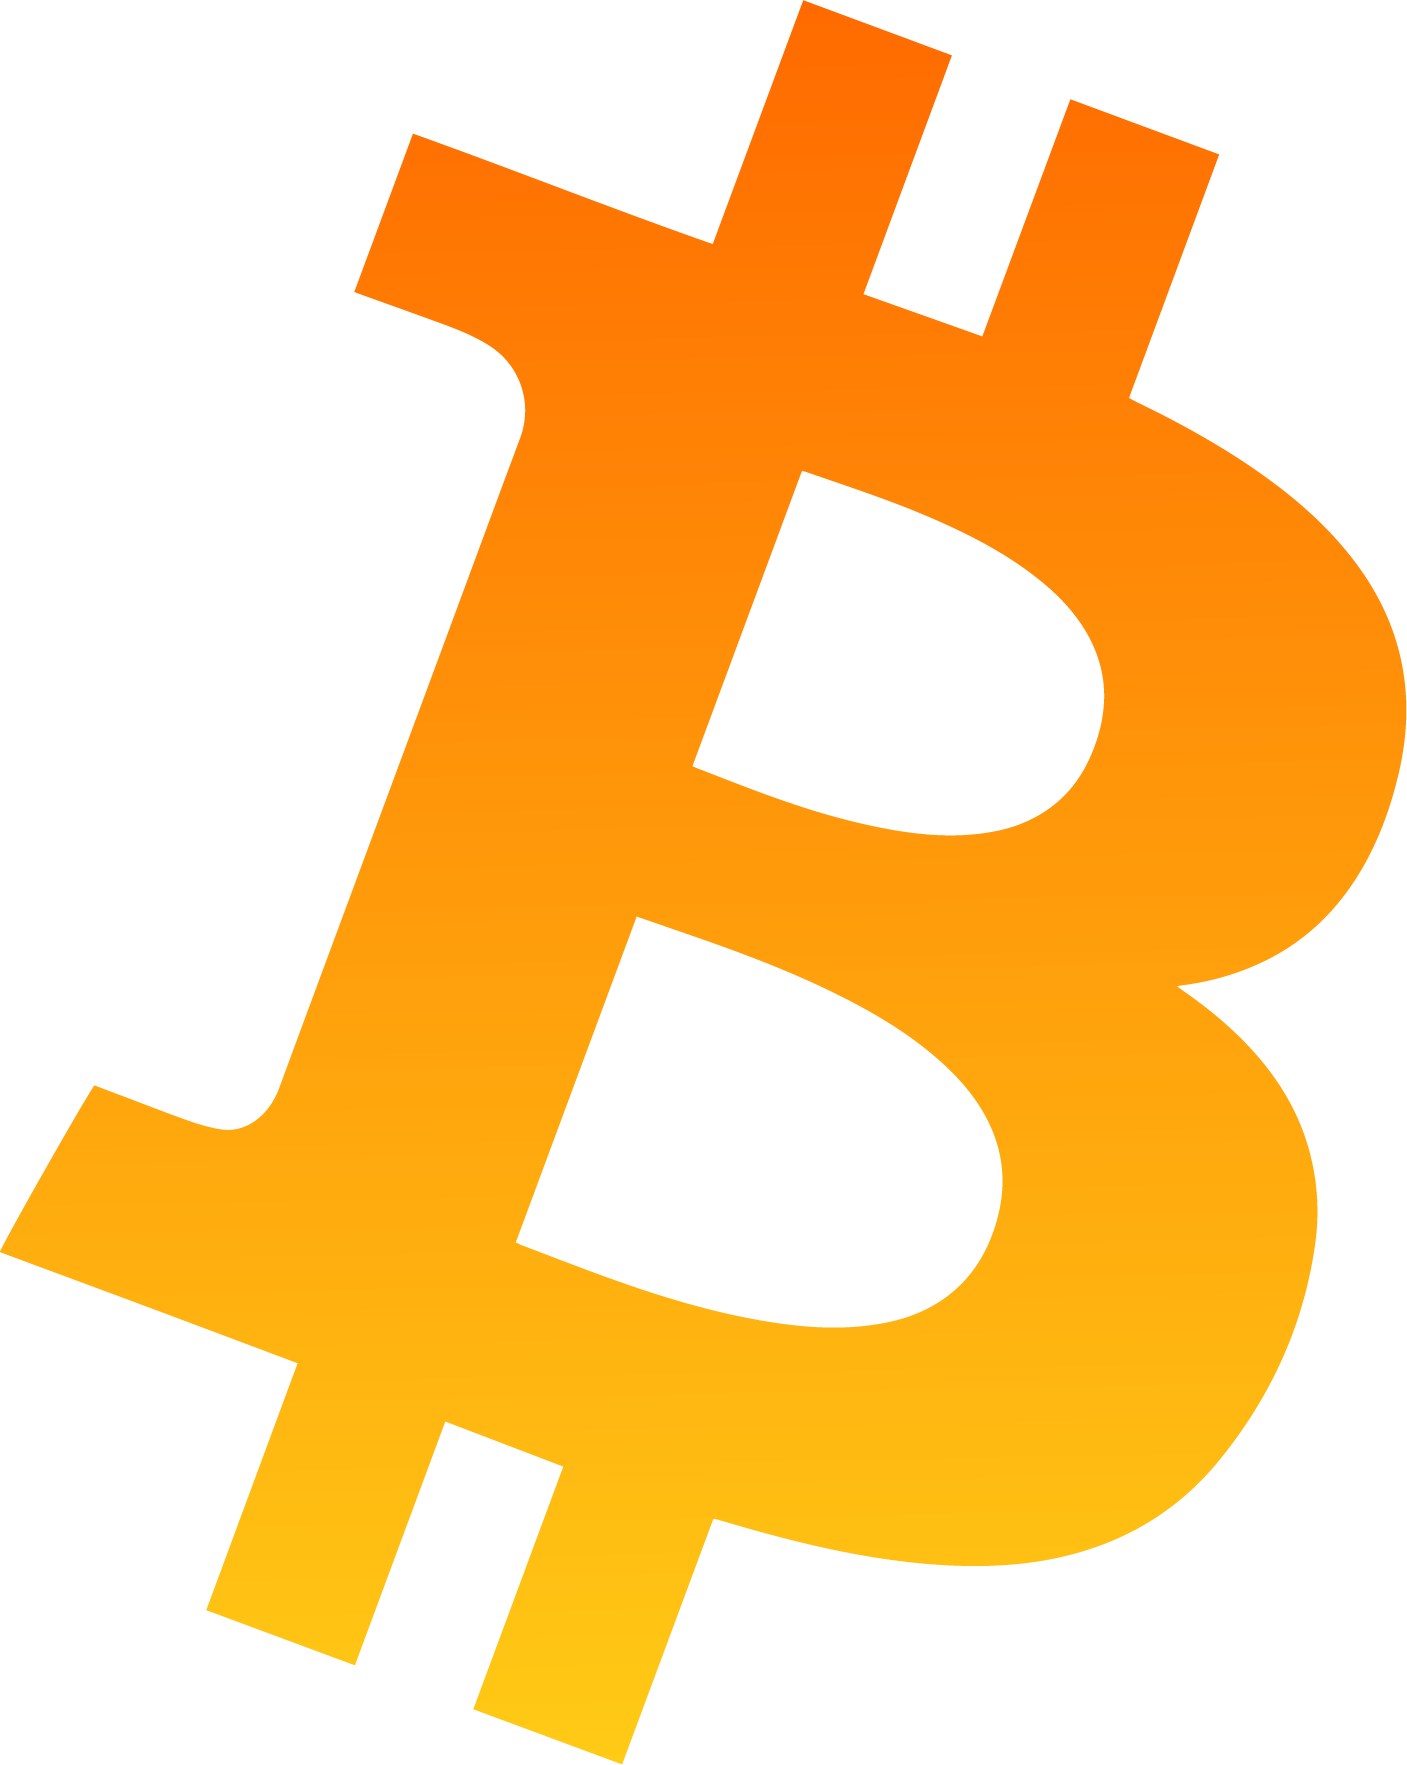 The-blockchain-today-logo